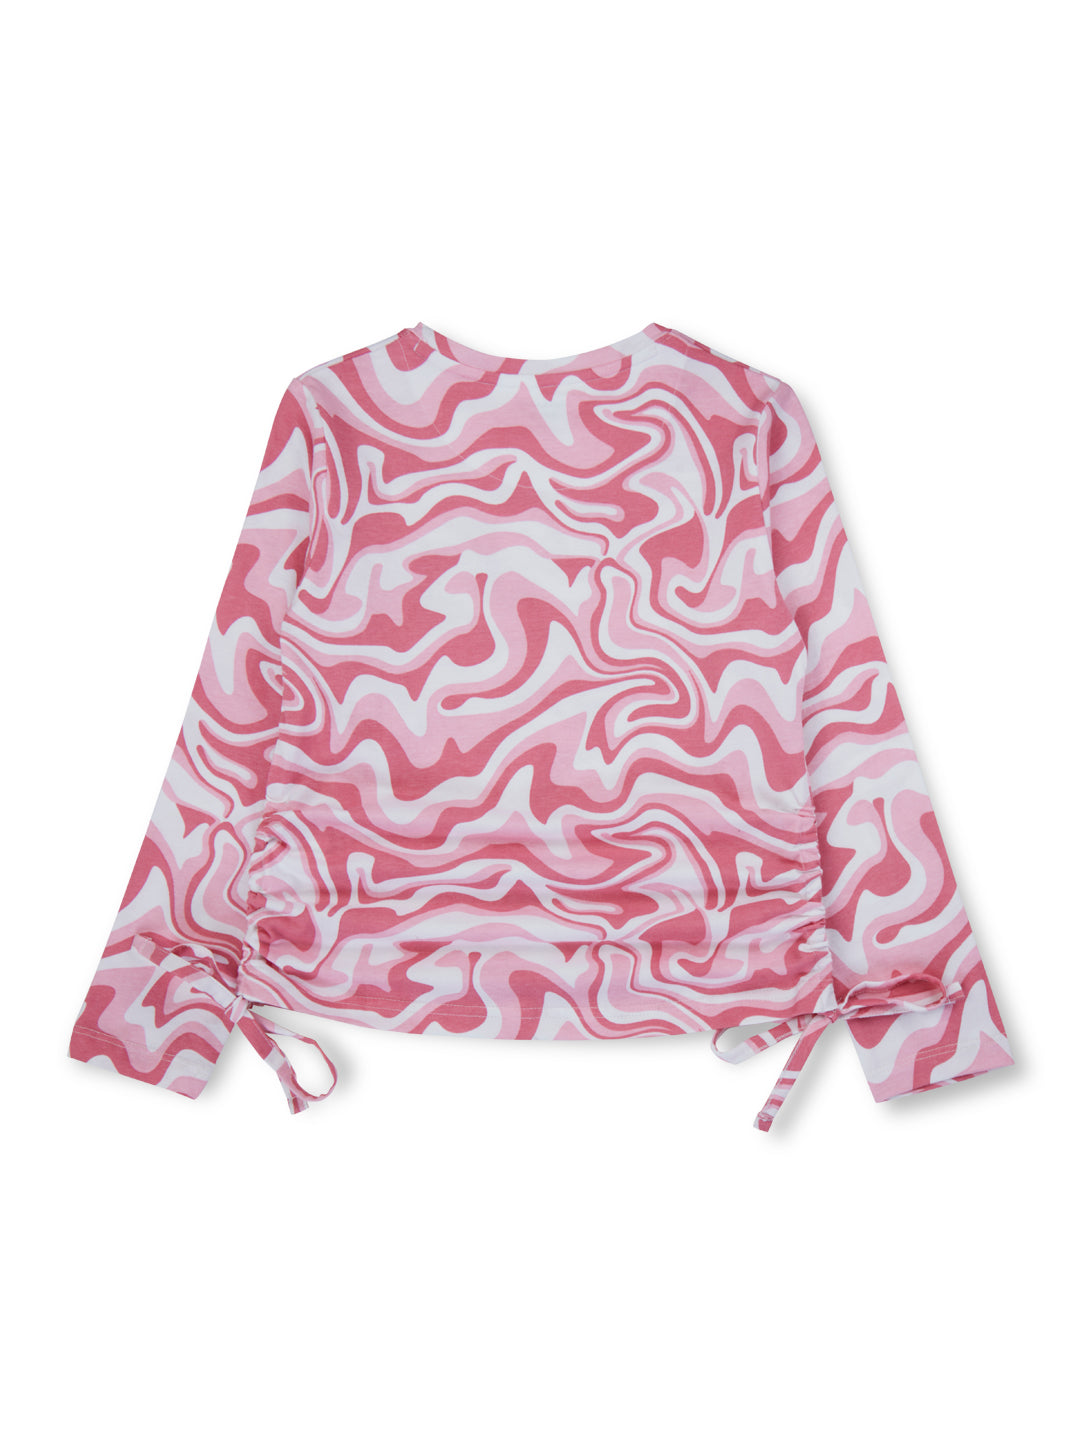 Girls Pink Camoflague Print Cotton Full Sleeves Knits Top